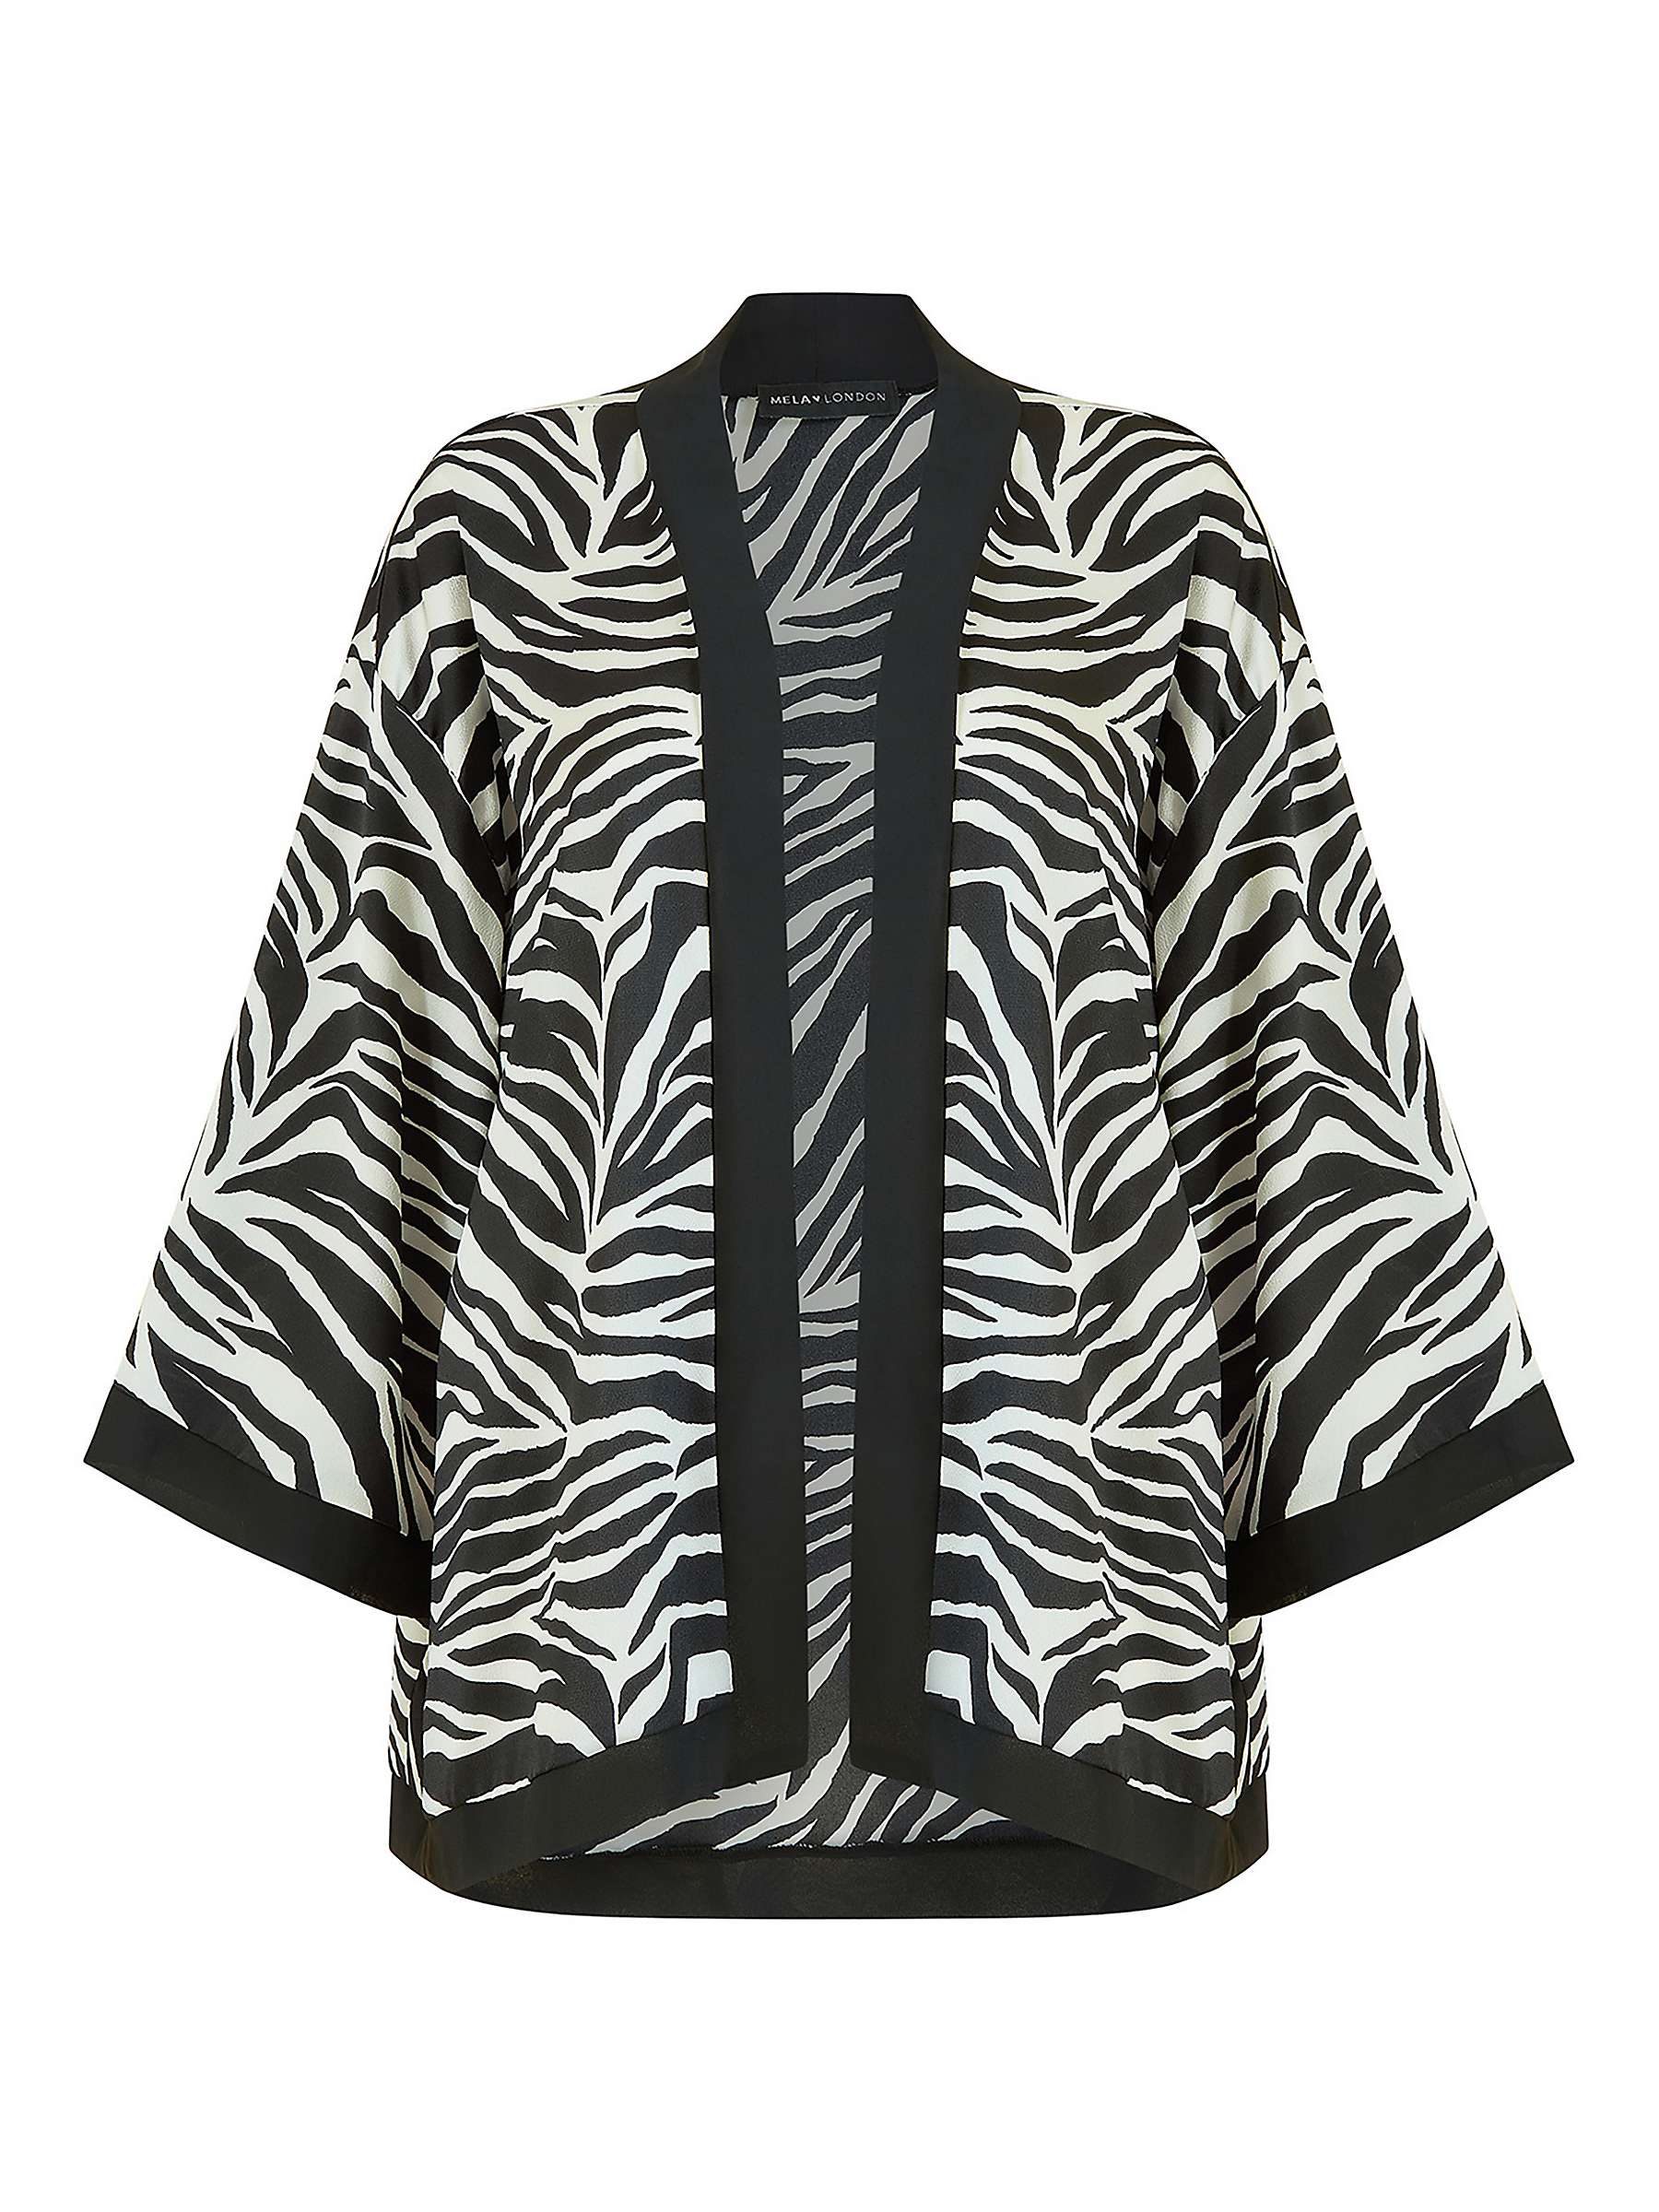 Buy Mela London Zebra Print Satin Kimono, Black/White Online at johnlewis.com